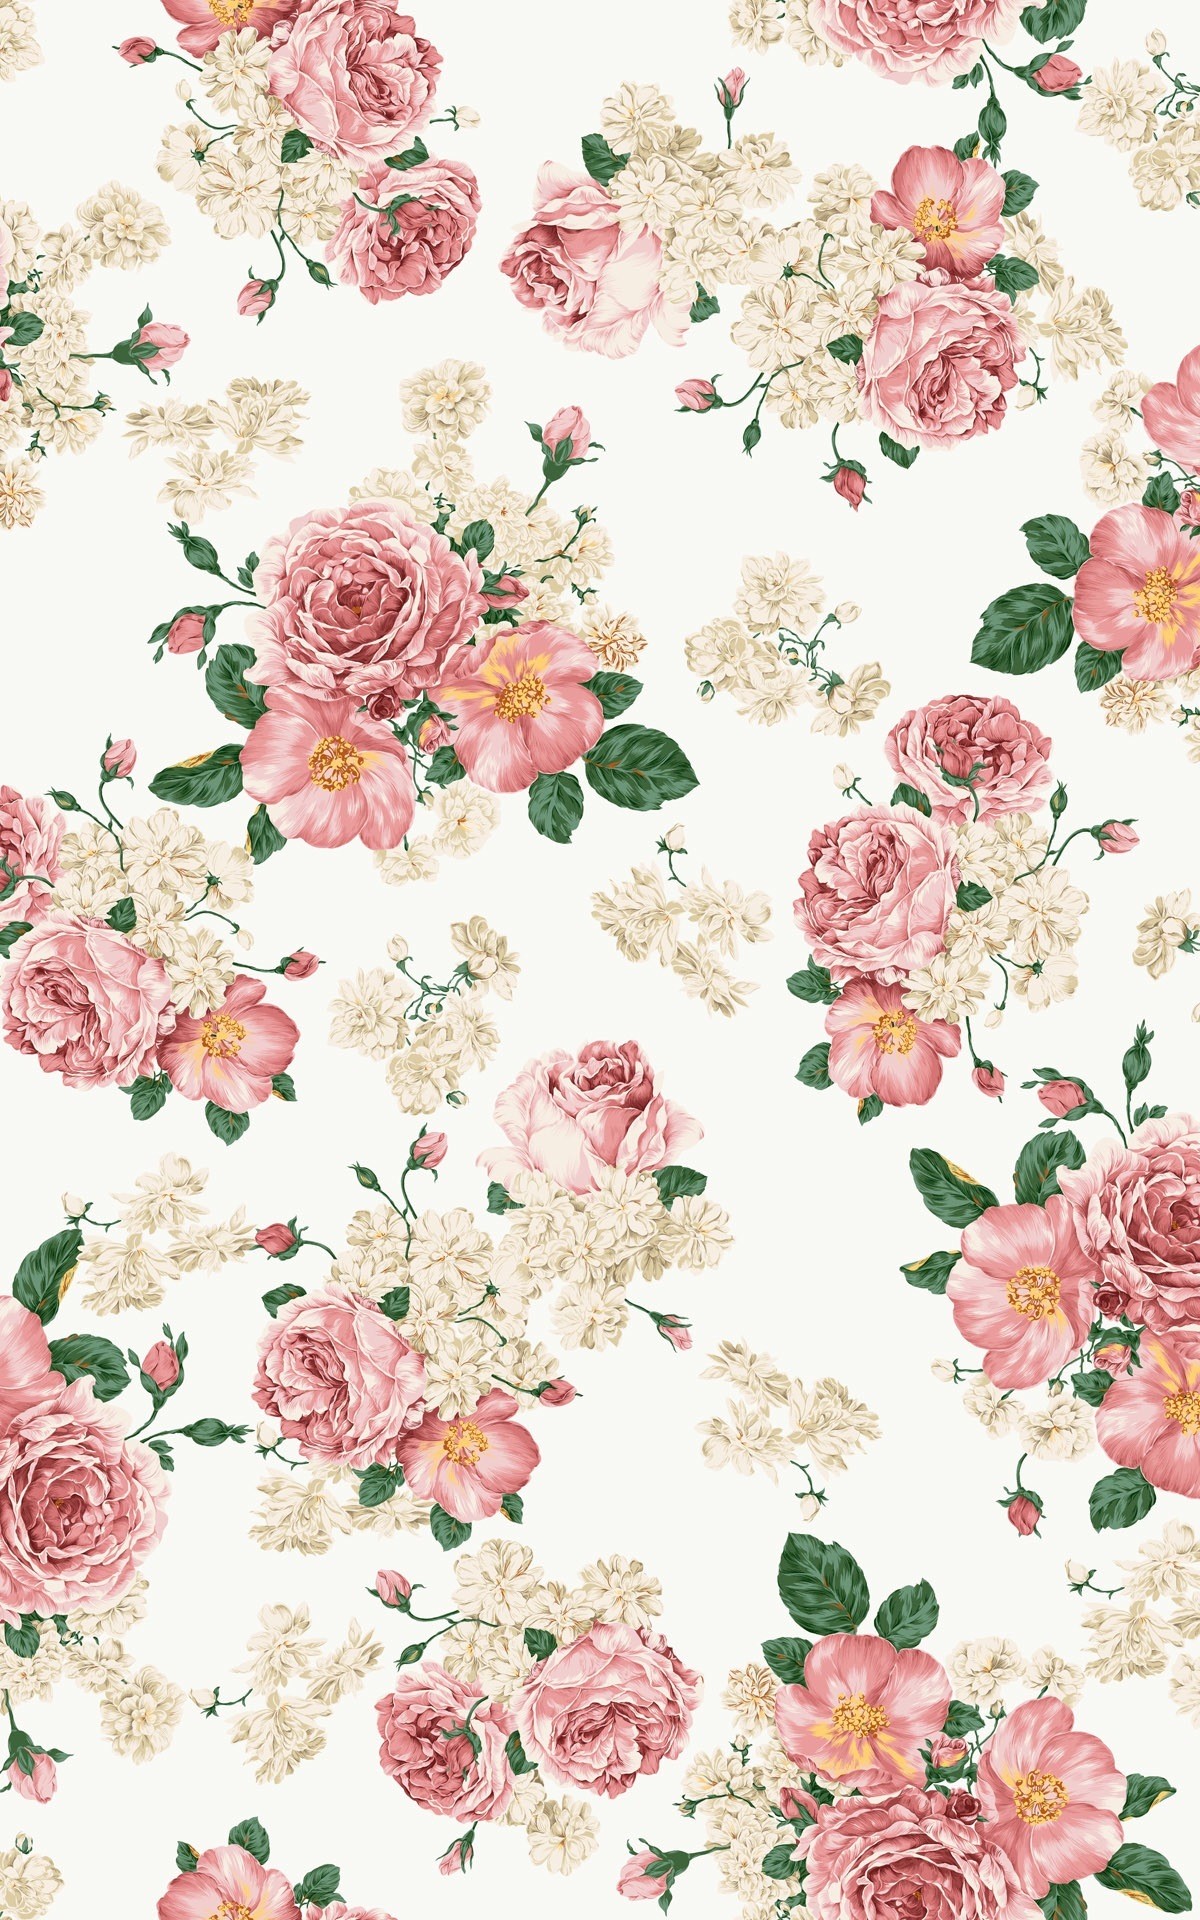 1200x1920 Flower Wallpaper For Iphone Tumblr - Share Online